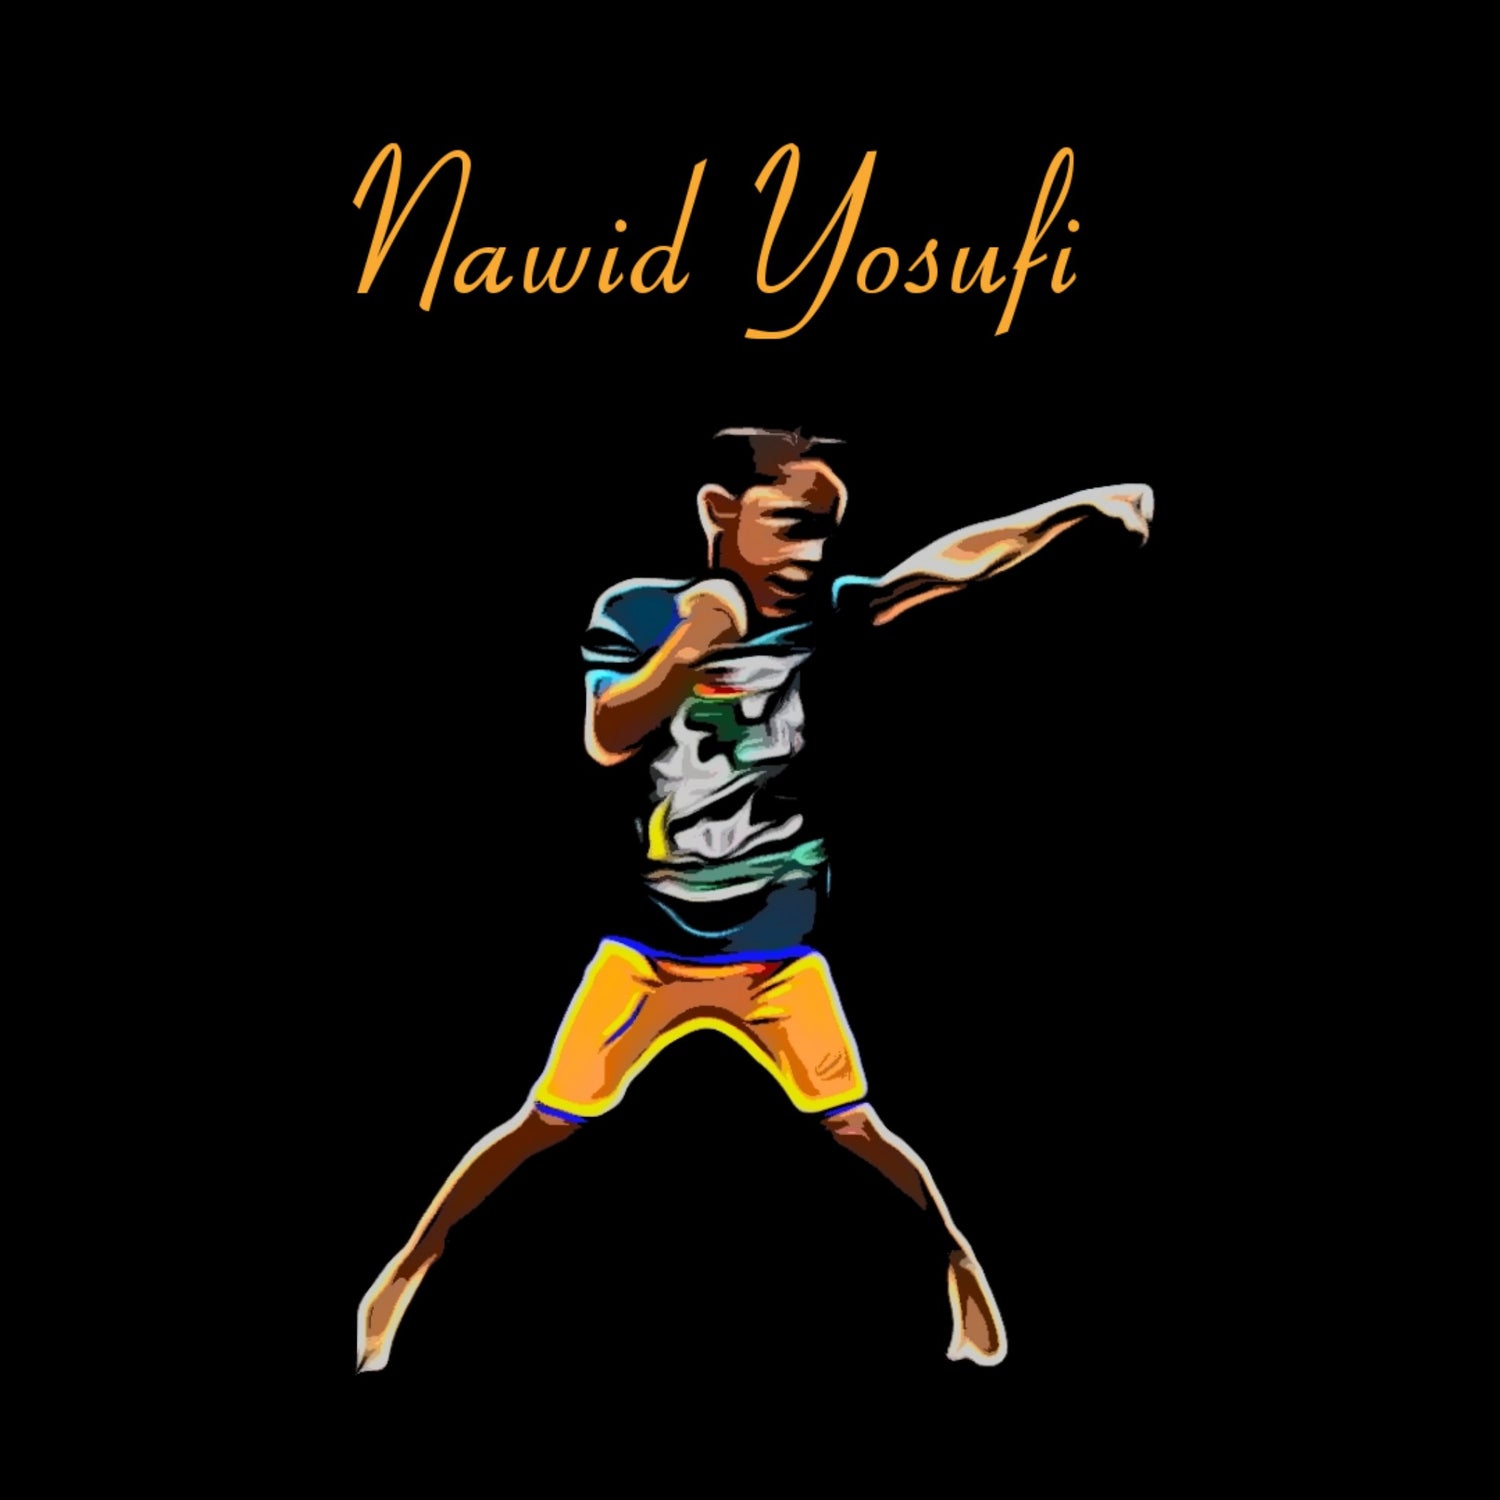 The Nawid Yosufi Brand